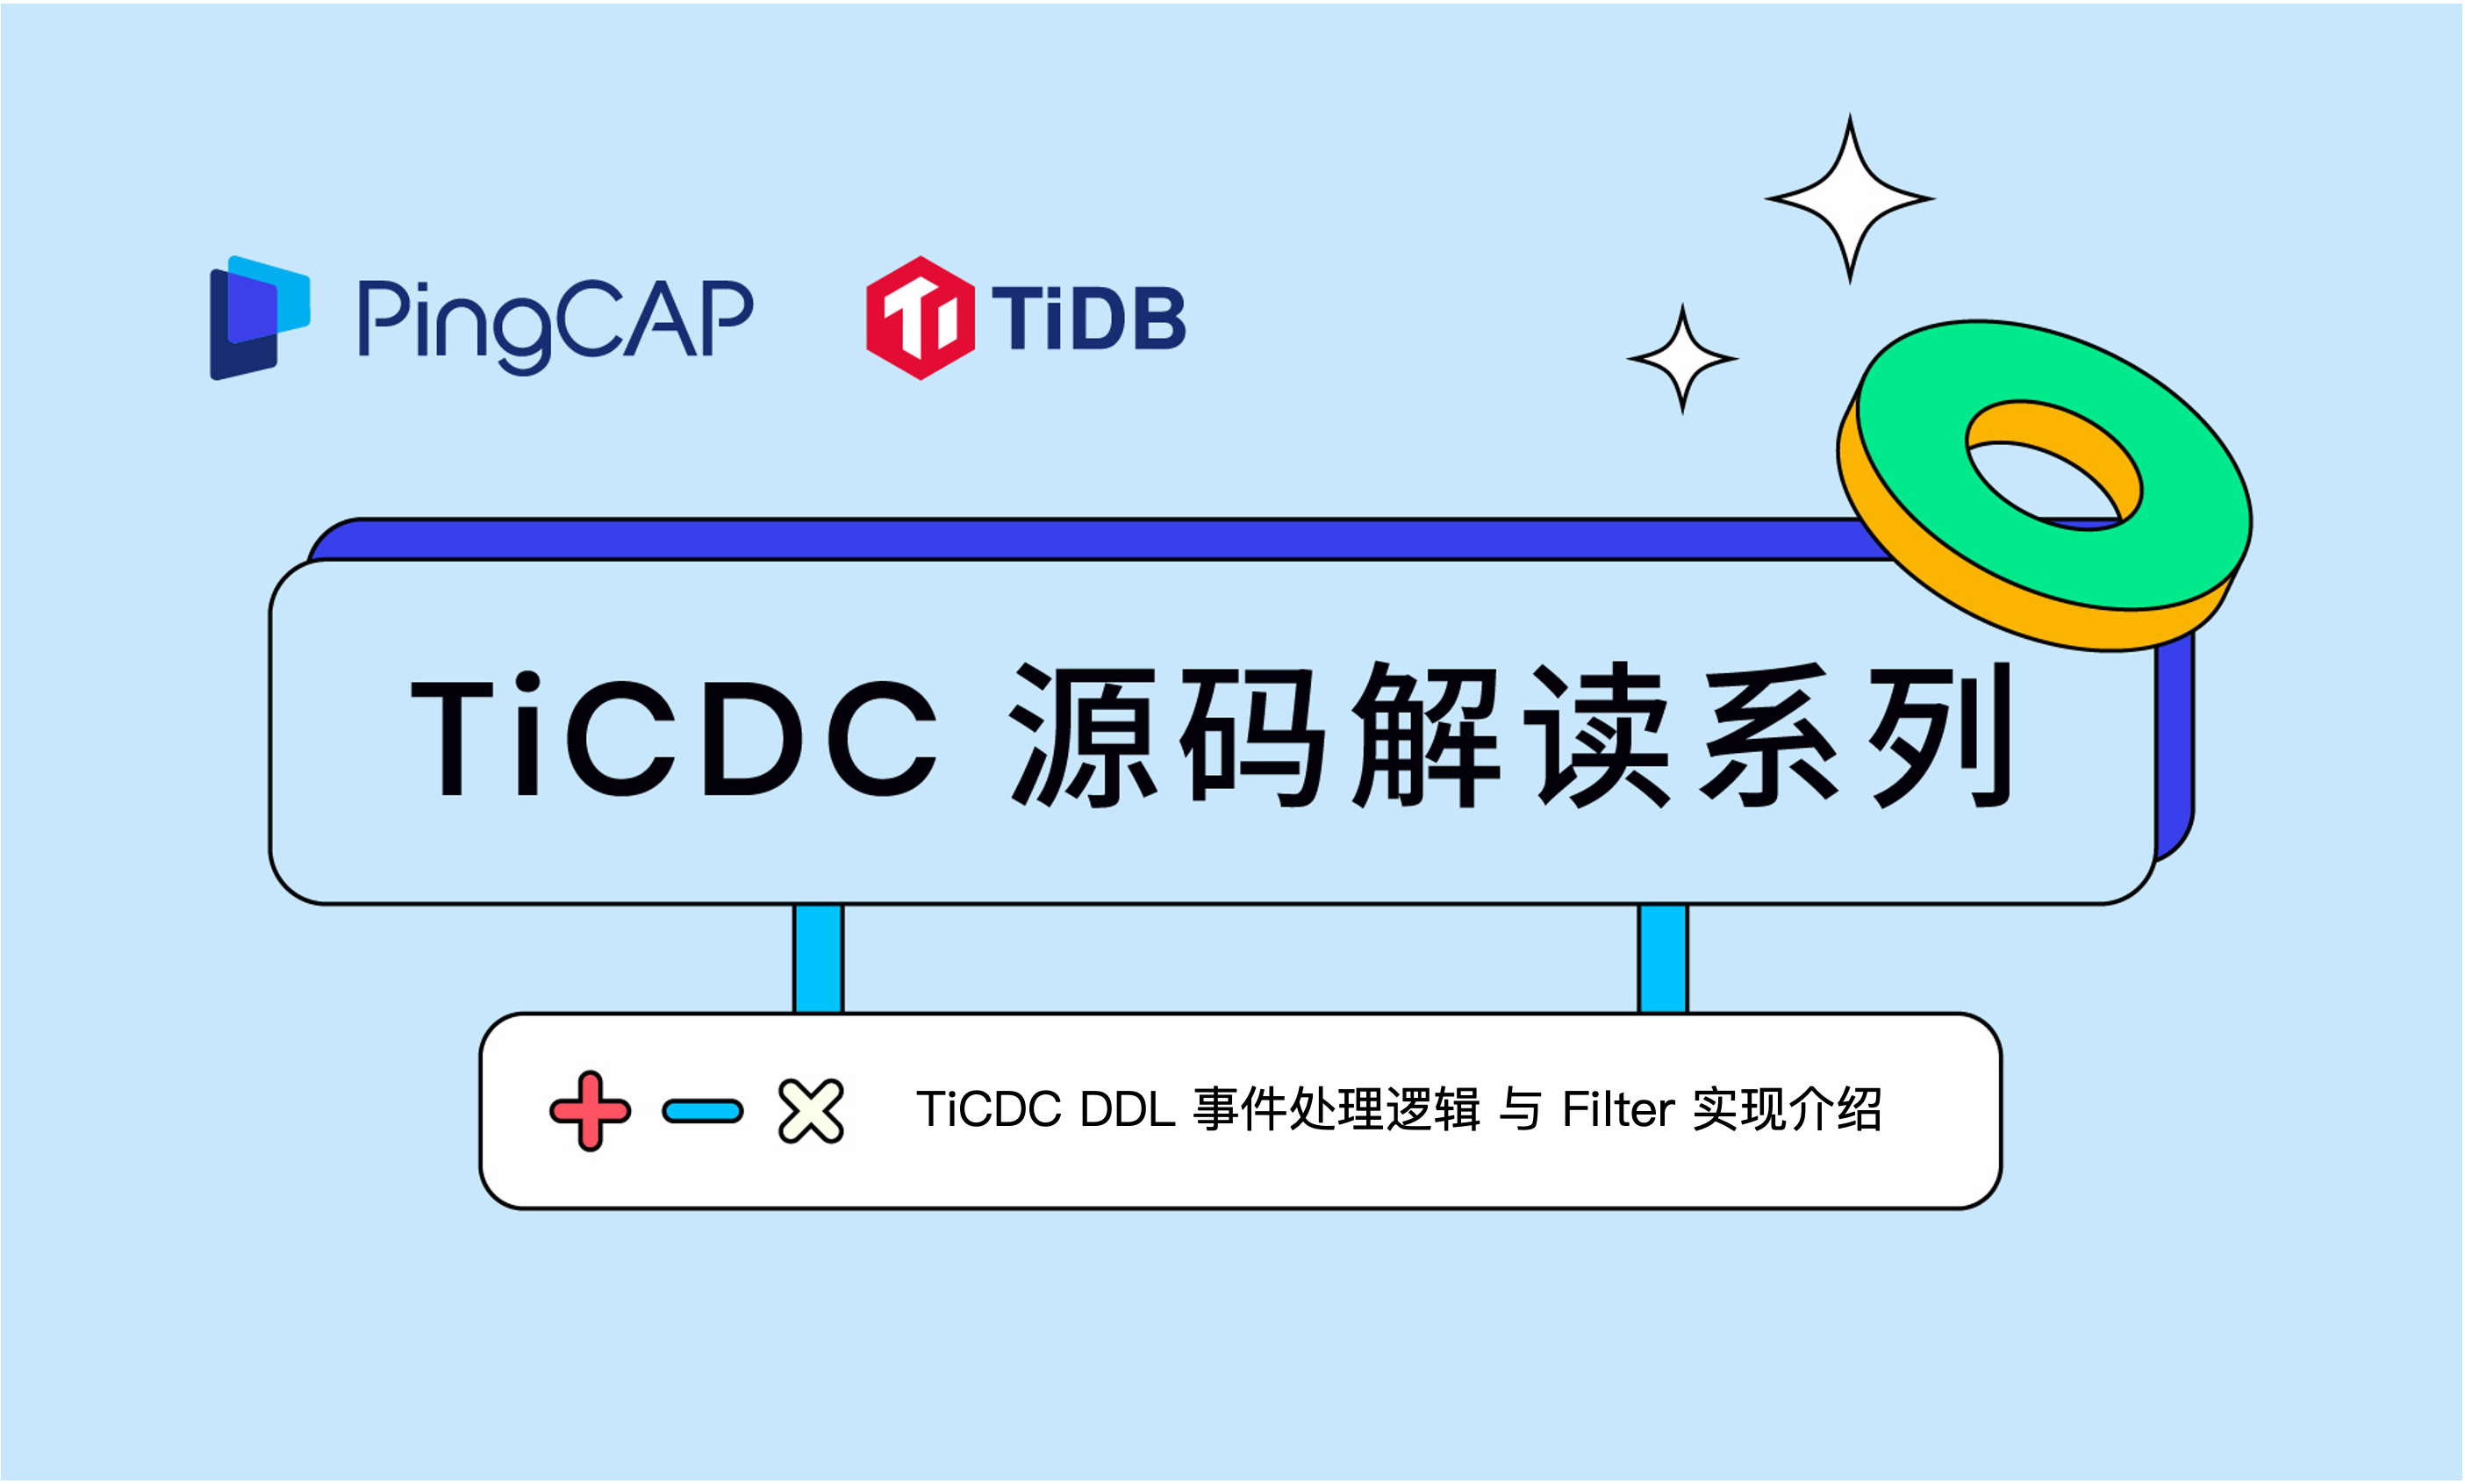 TiCDC 源码解读#5 TiCDC DDL 事件处理逻辑 与 Filter 实现介绍